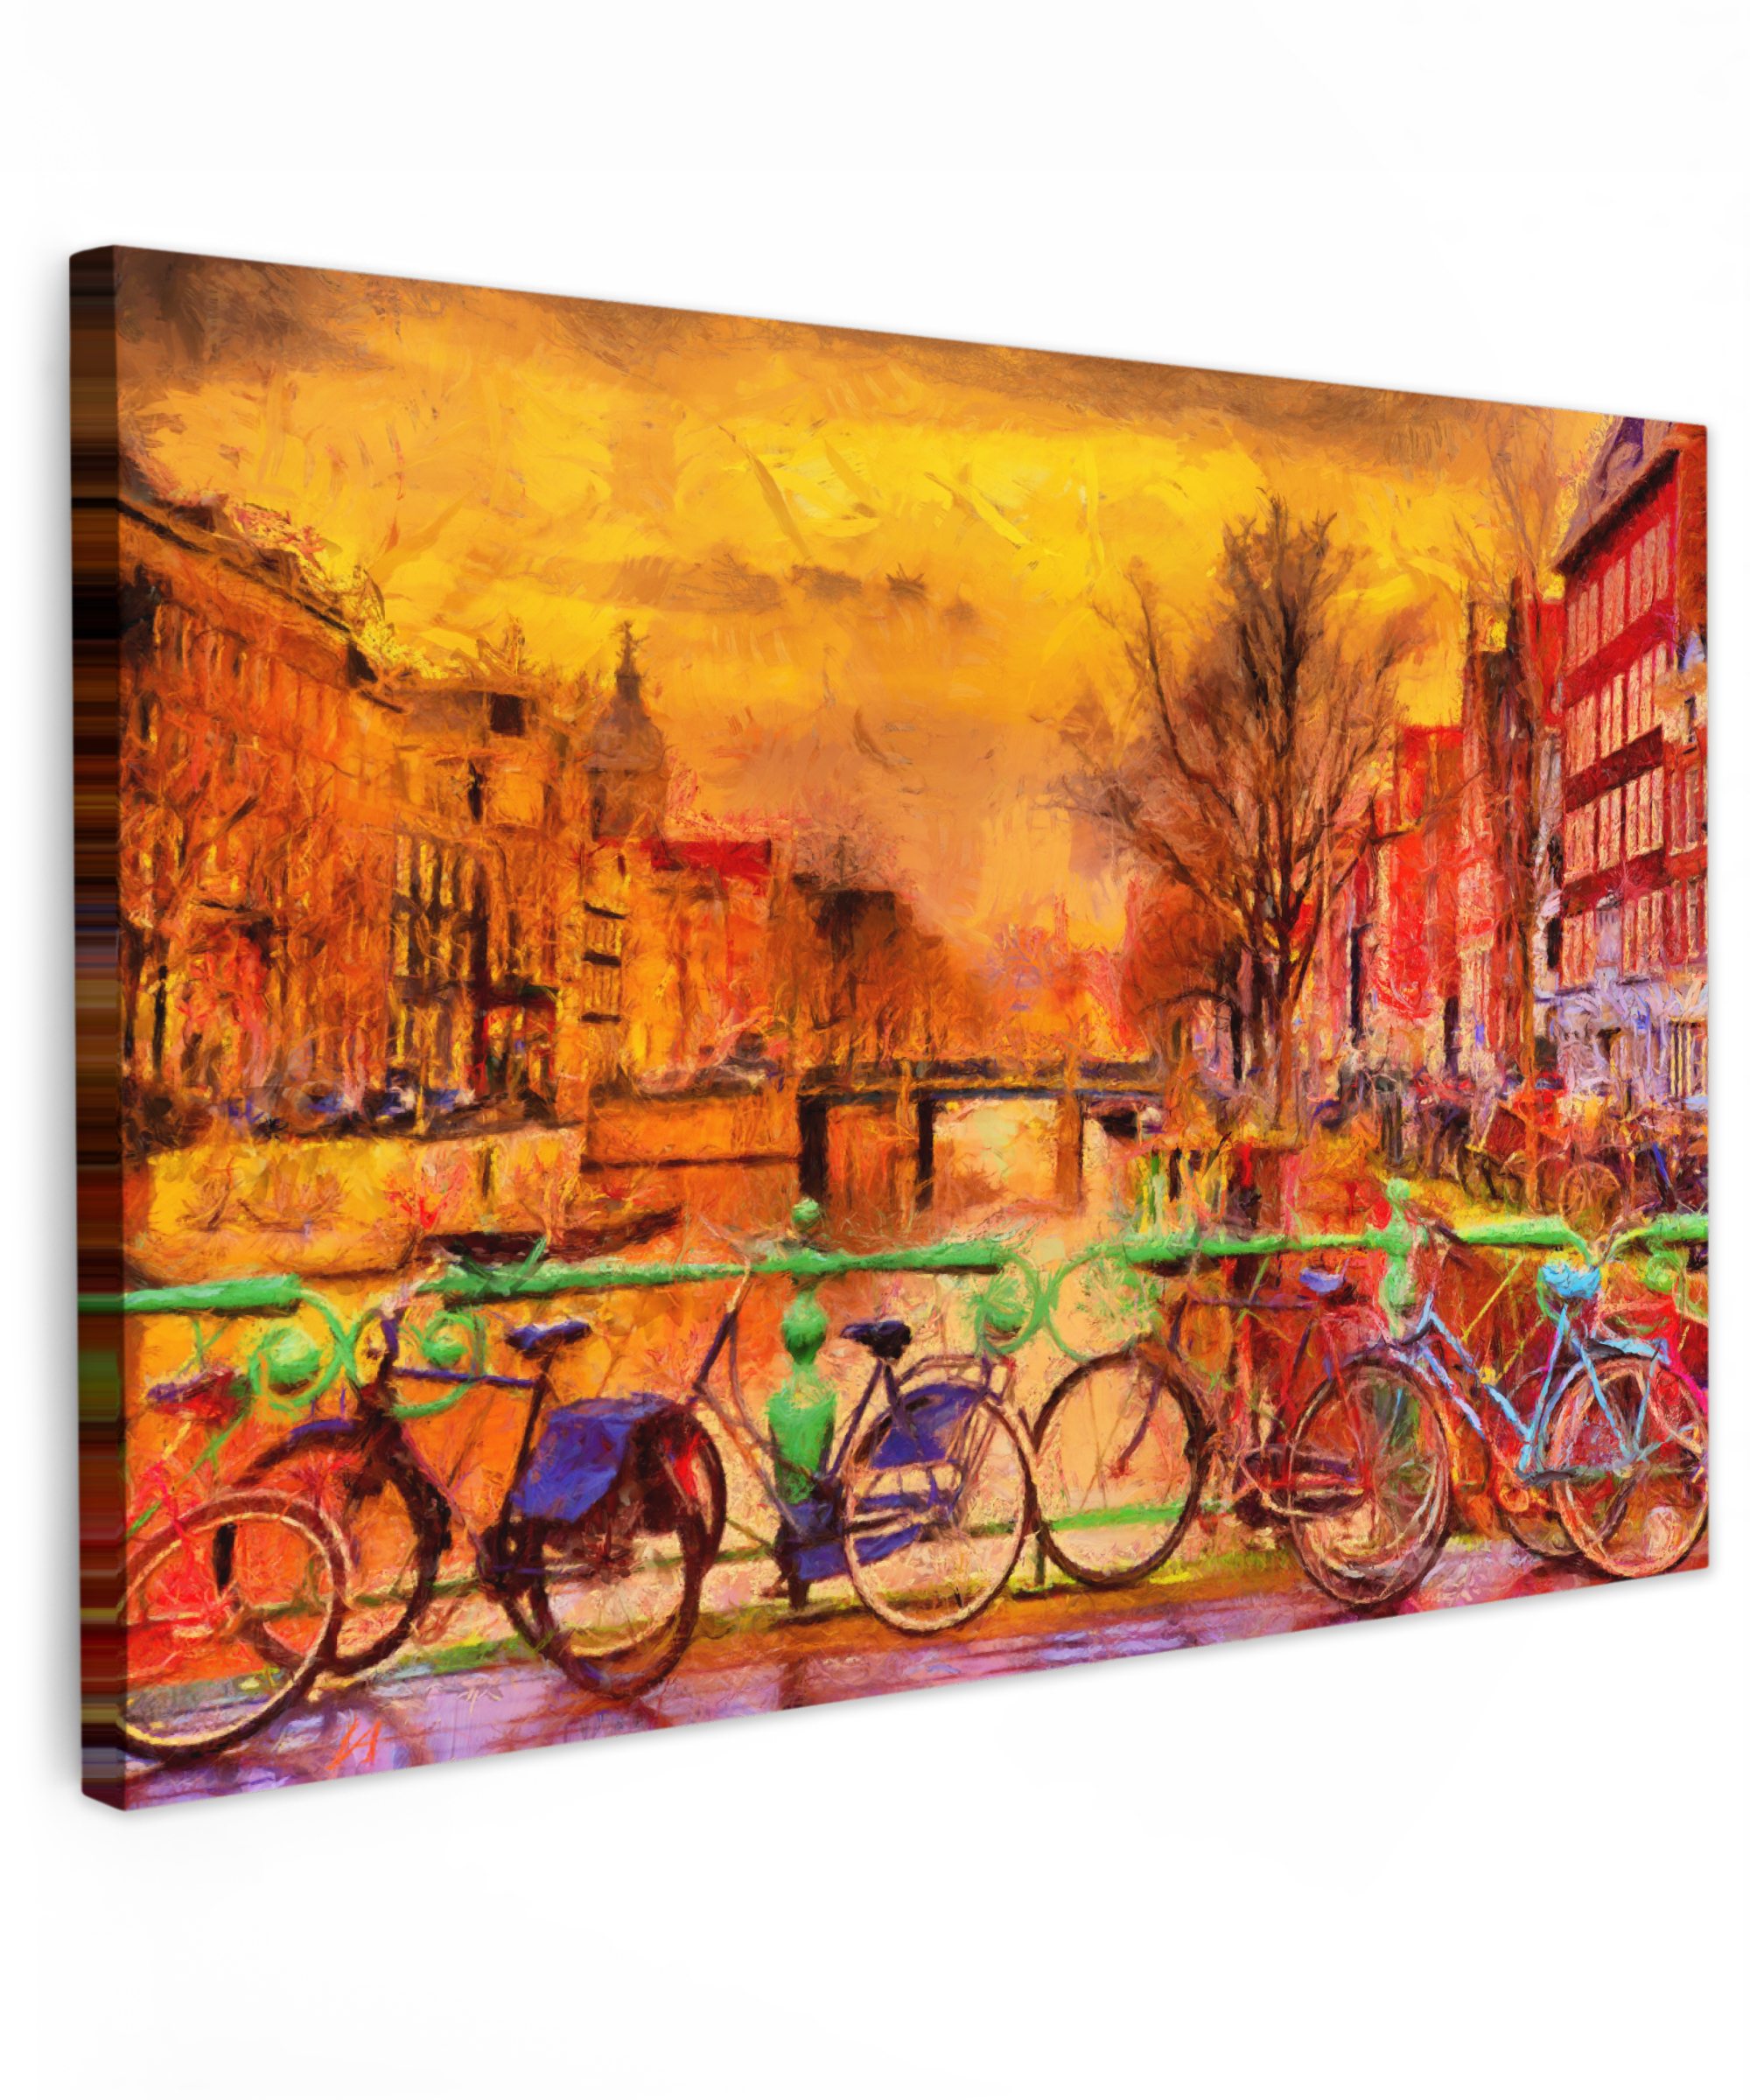 Leinwandbild - Gemälde - Fahrrad - Amsterdam - Gracht - Öl